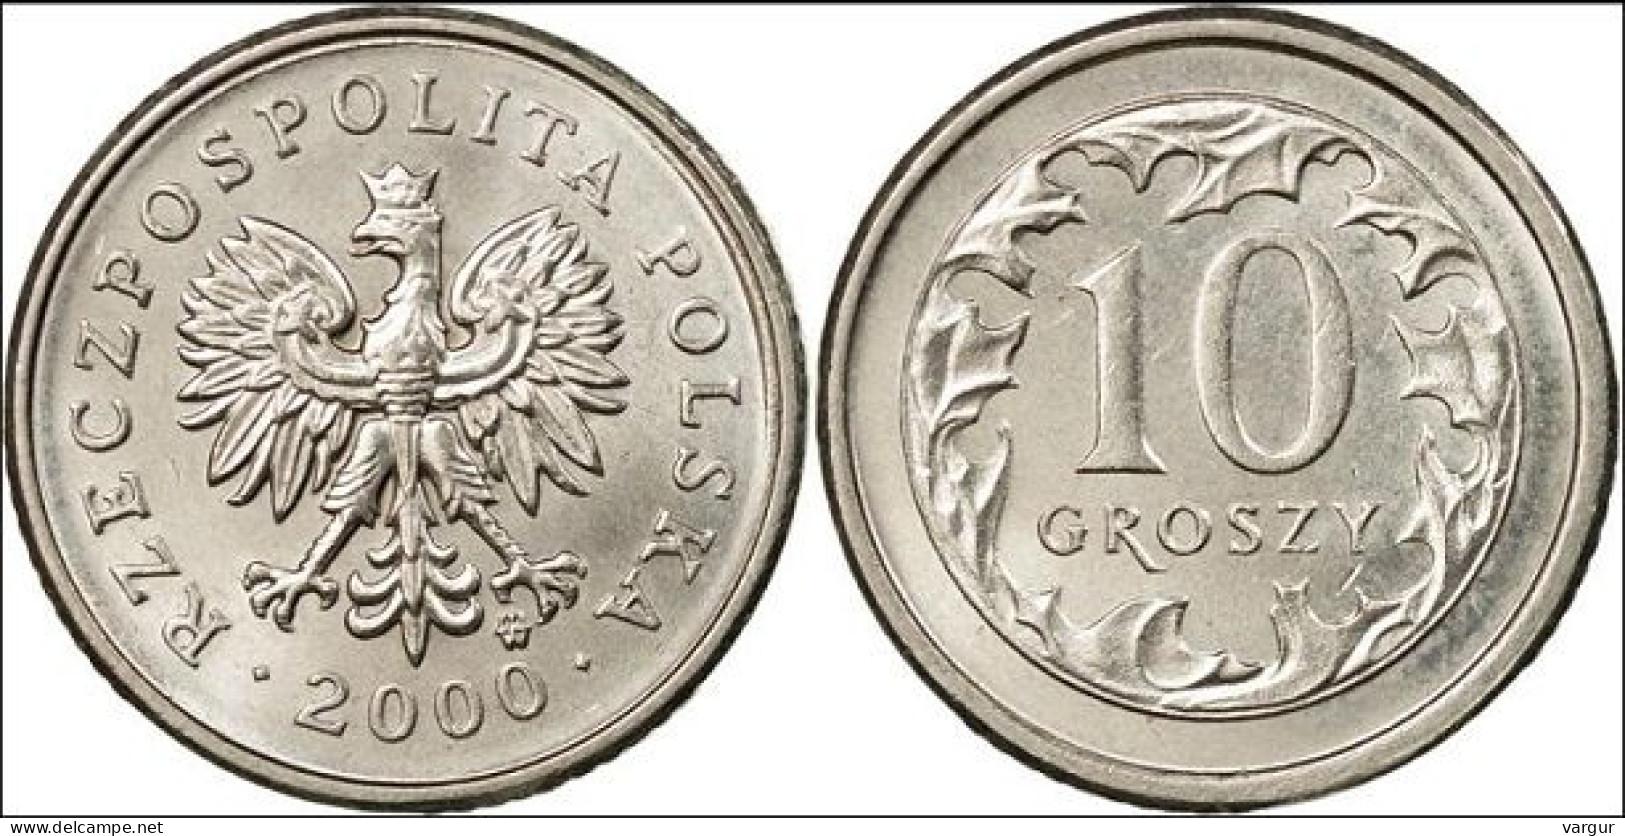 POLAND 2000. 10 Groszy Coin. Y#279, XF-UNC - Poland